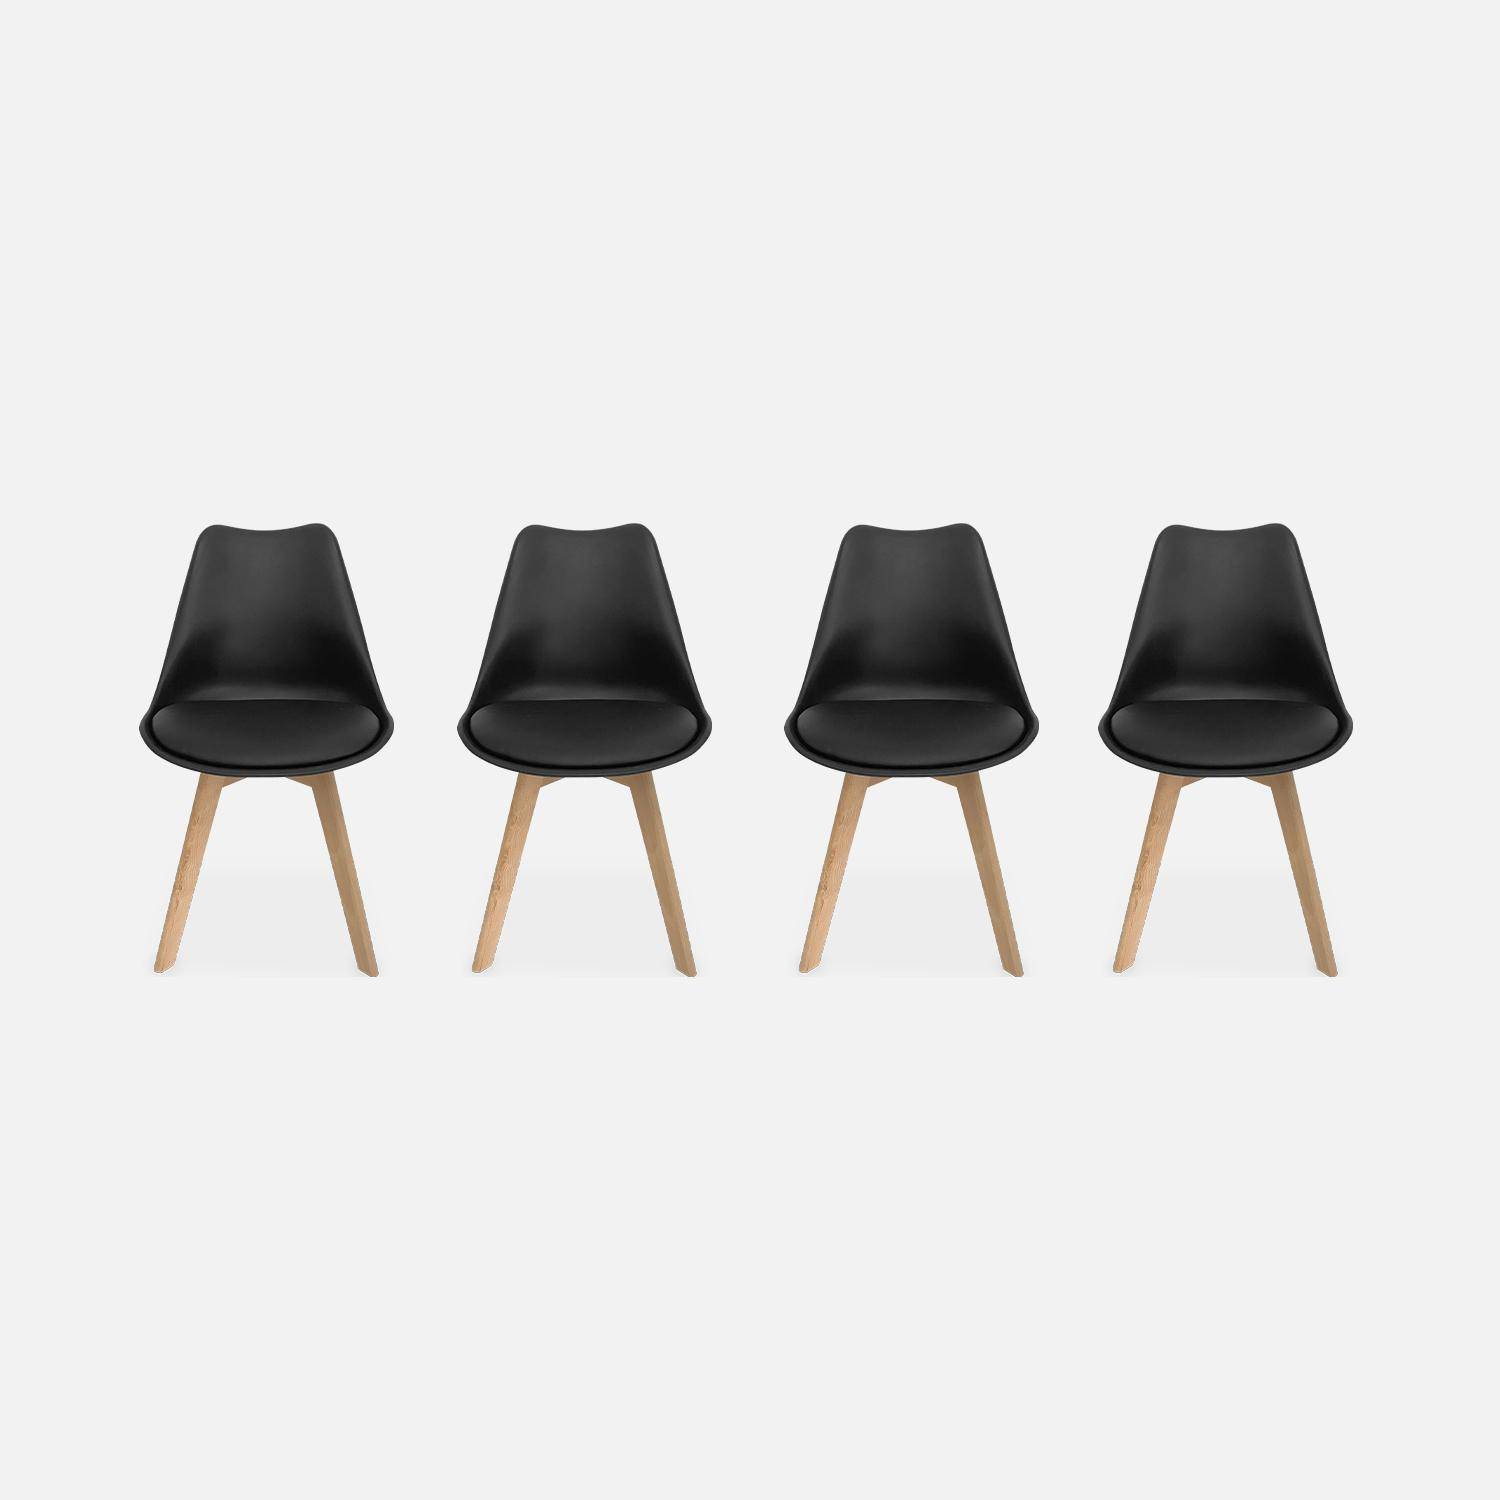 Set of 4 Scandinavian chairs, beechwood legs, 1-seater chair, black Photo4